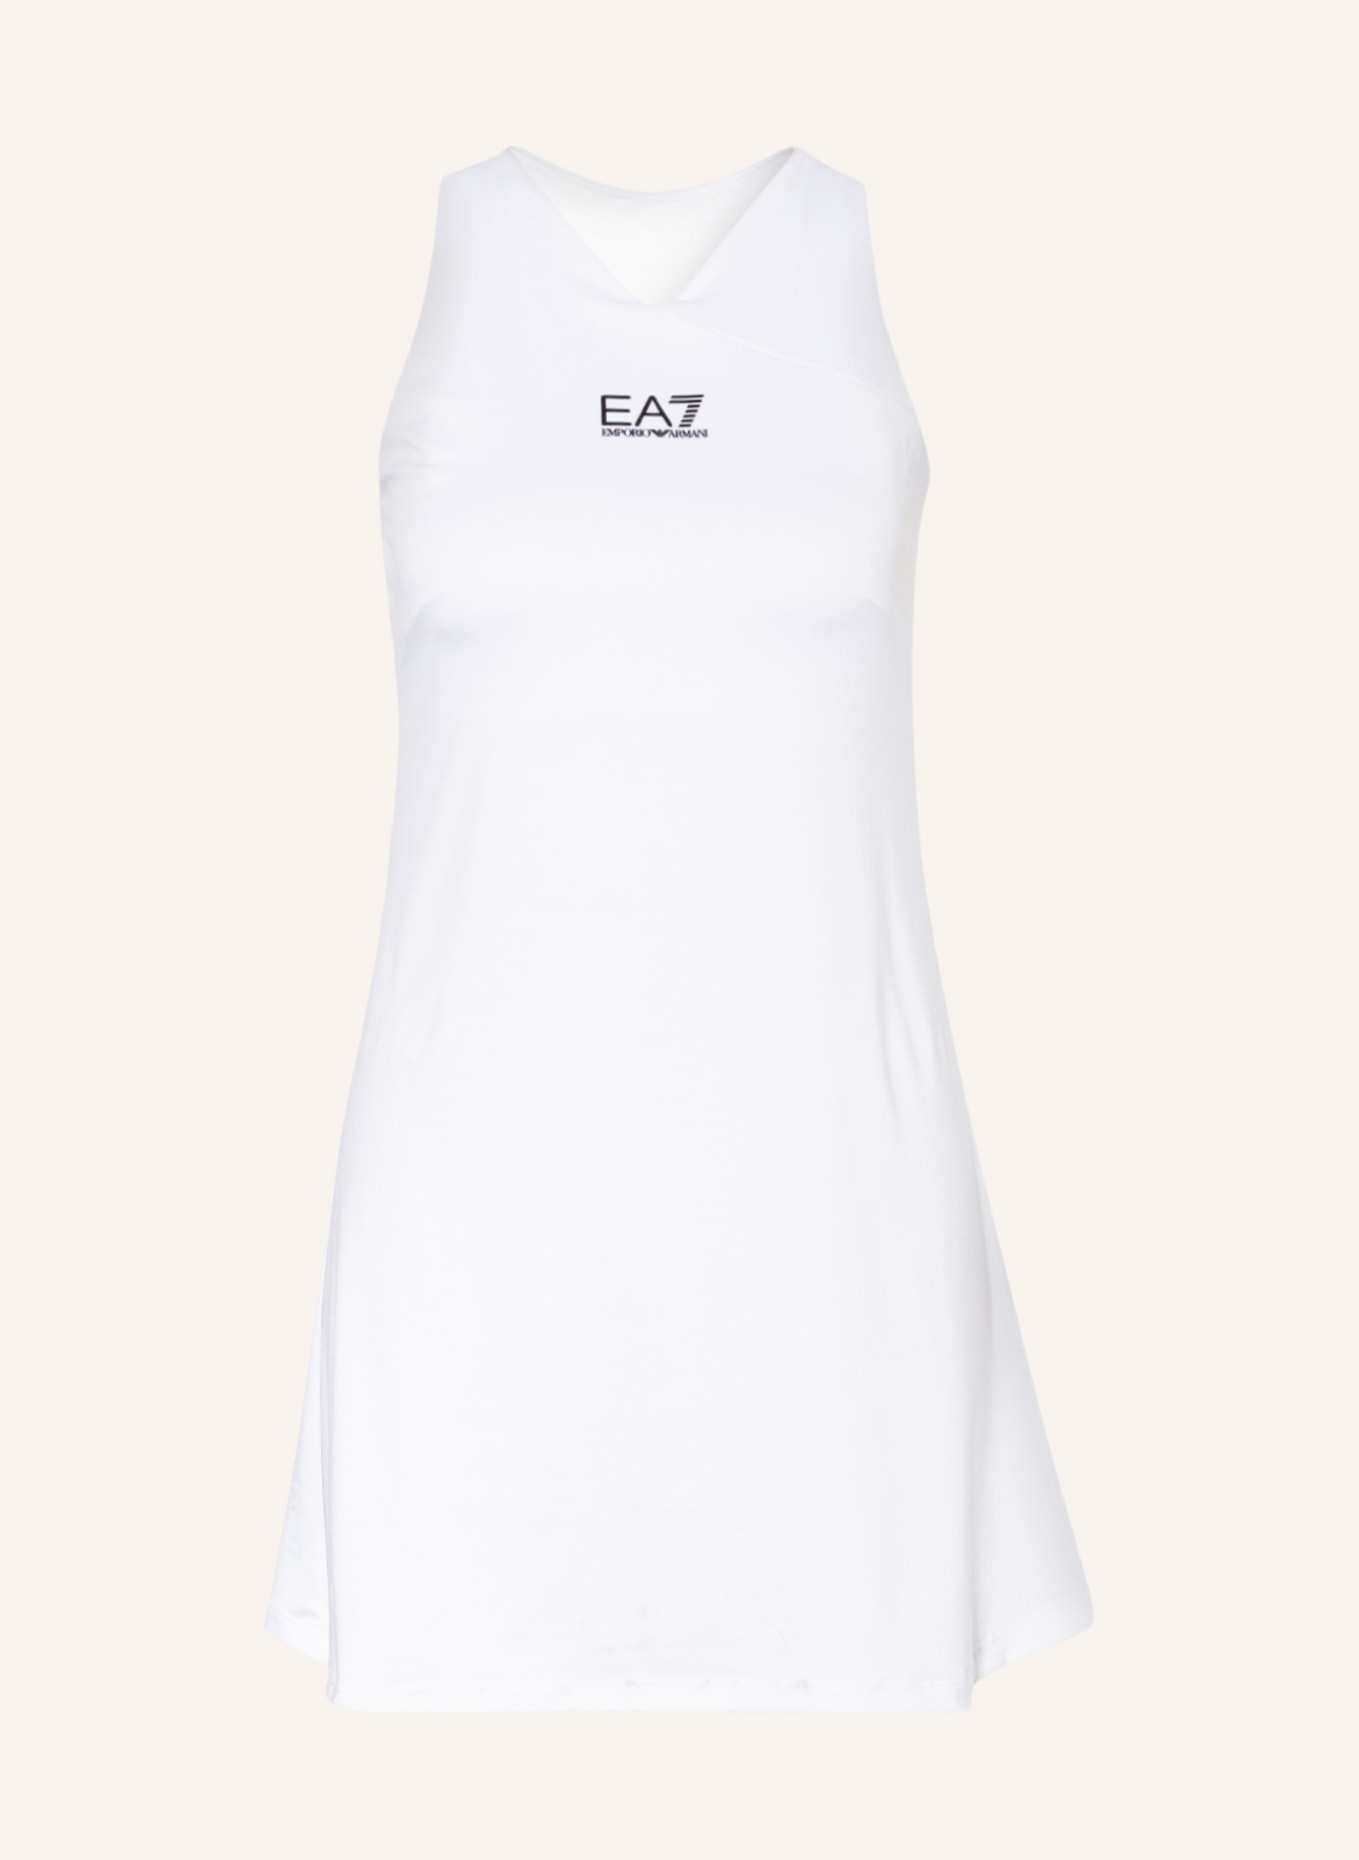 EA7 EMPORIO ARMANI Tennis dress with mesh, Color: WHITE (Image 1)